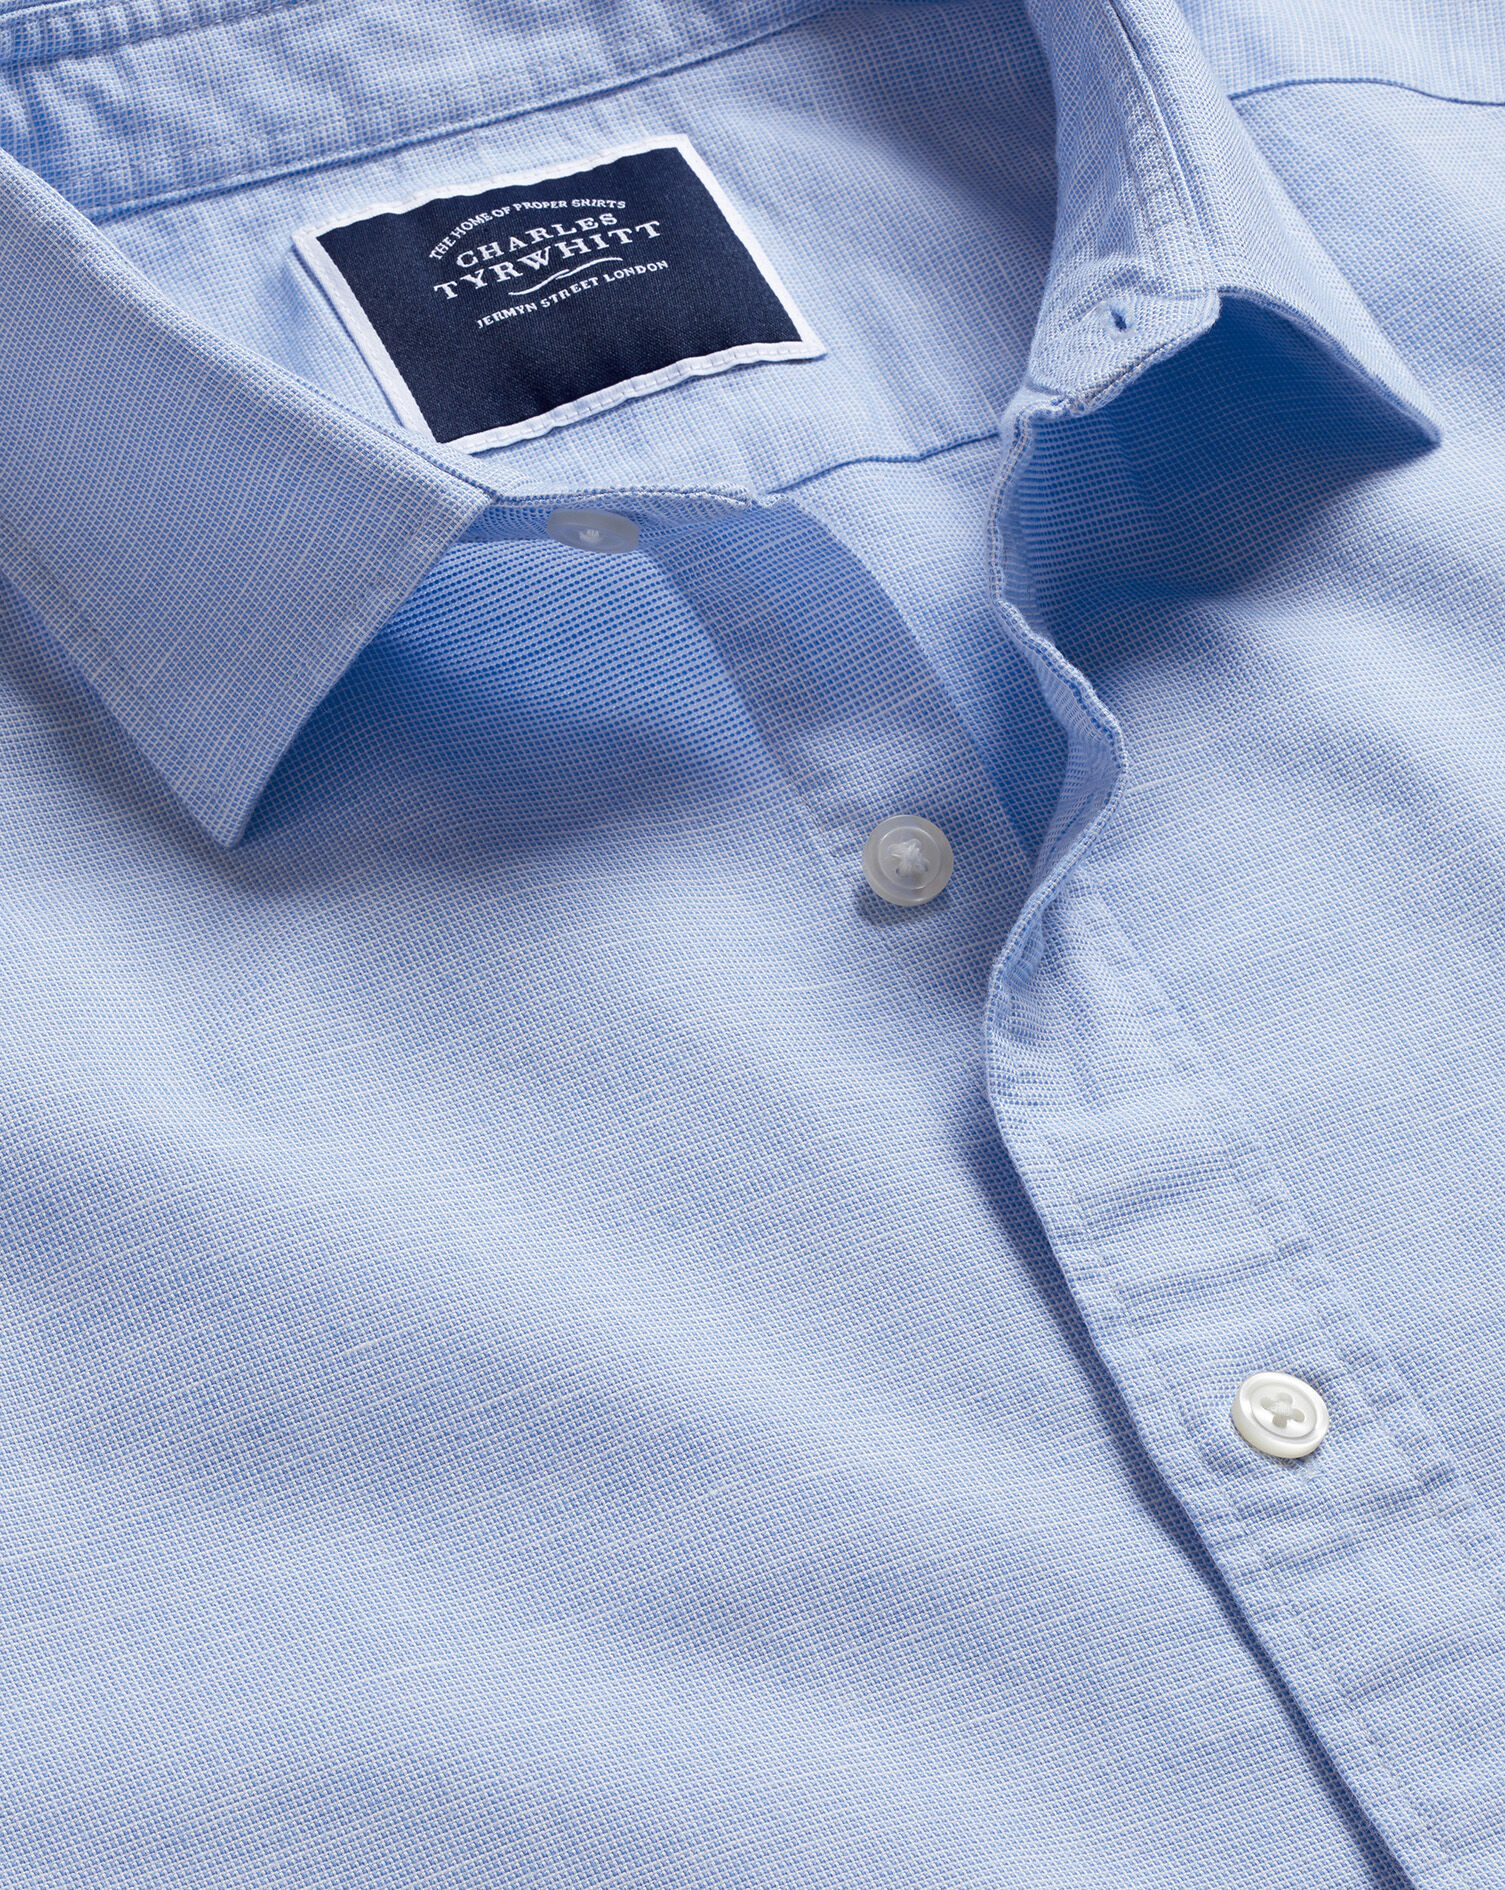 Men's Short Sleeve Shirts | Charles Tyrwhitt